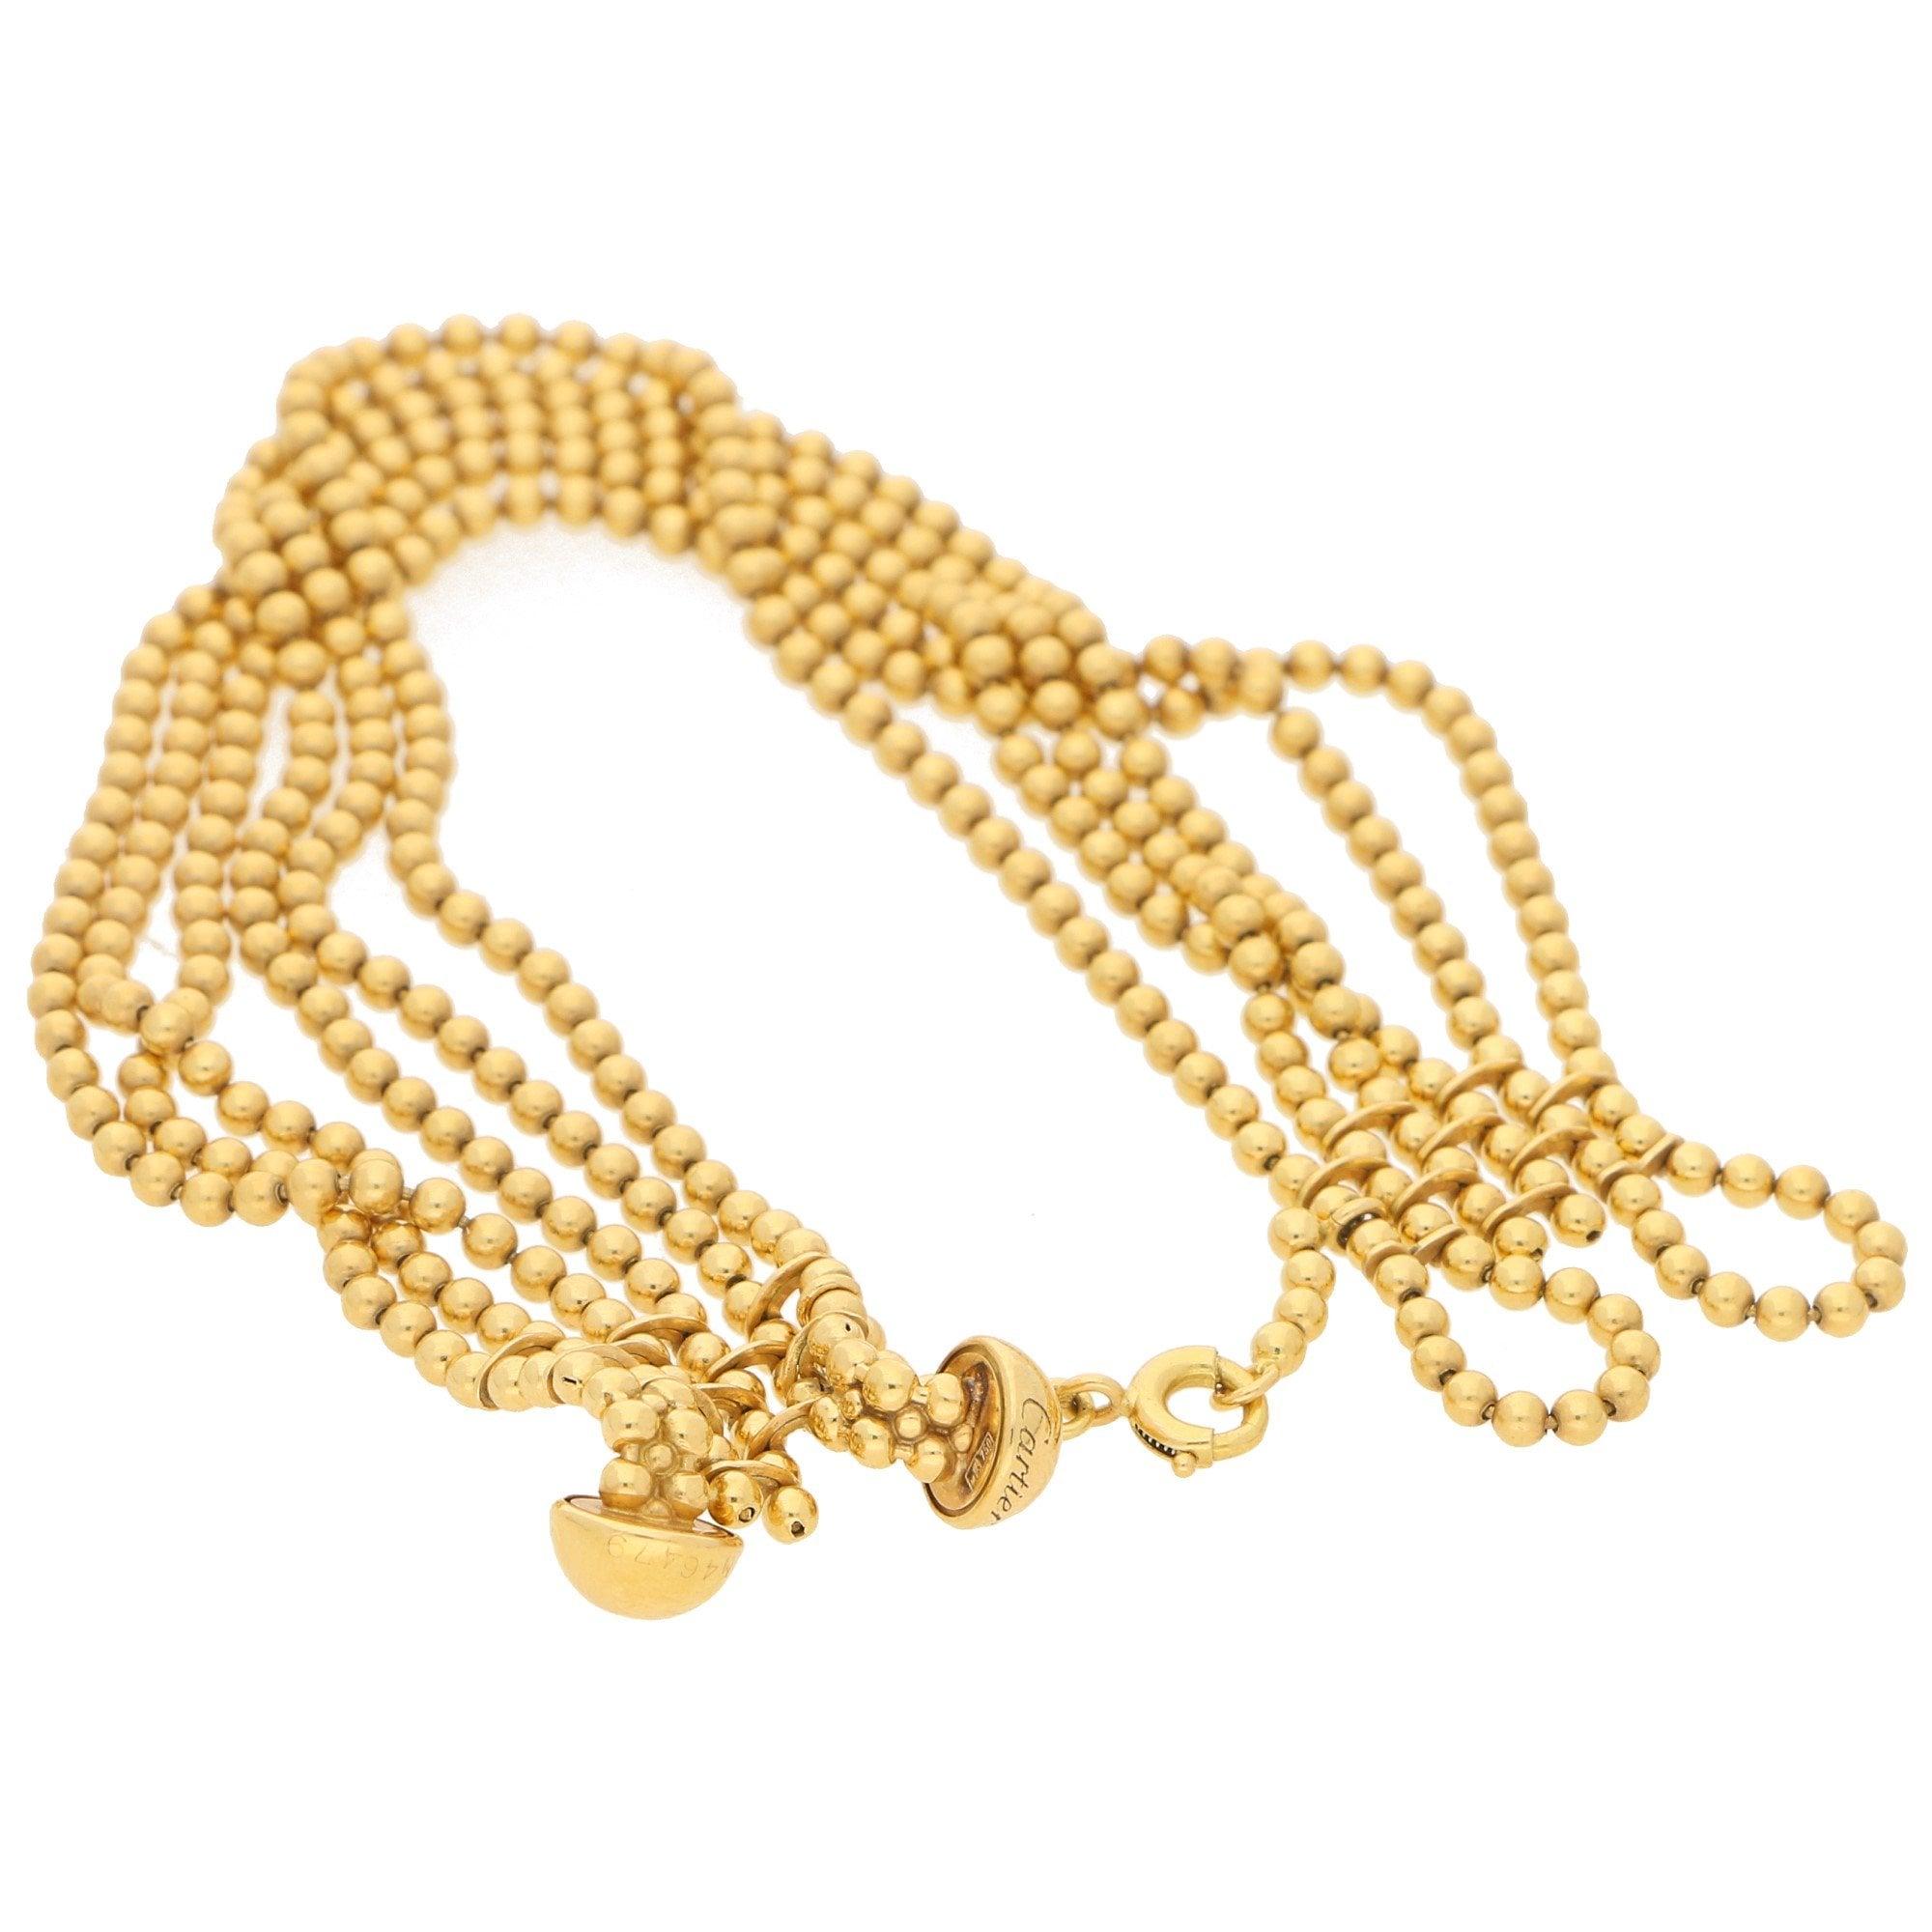 Women's or Men's Cartier Draperie Six-Row Bead-Link Bracelet in Yellow Gold, 1990s